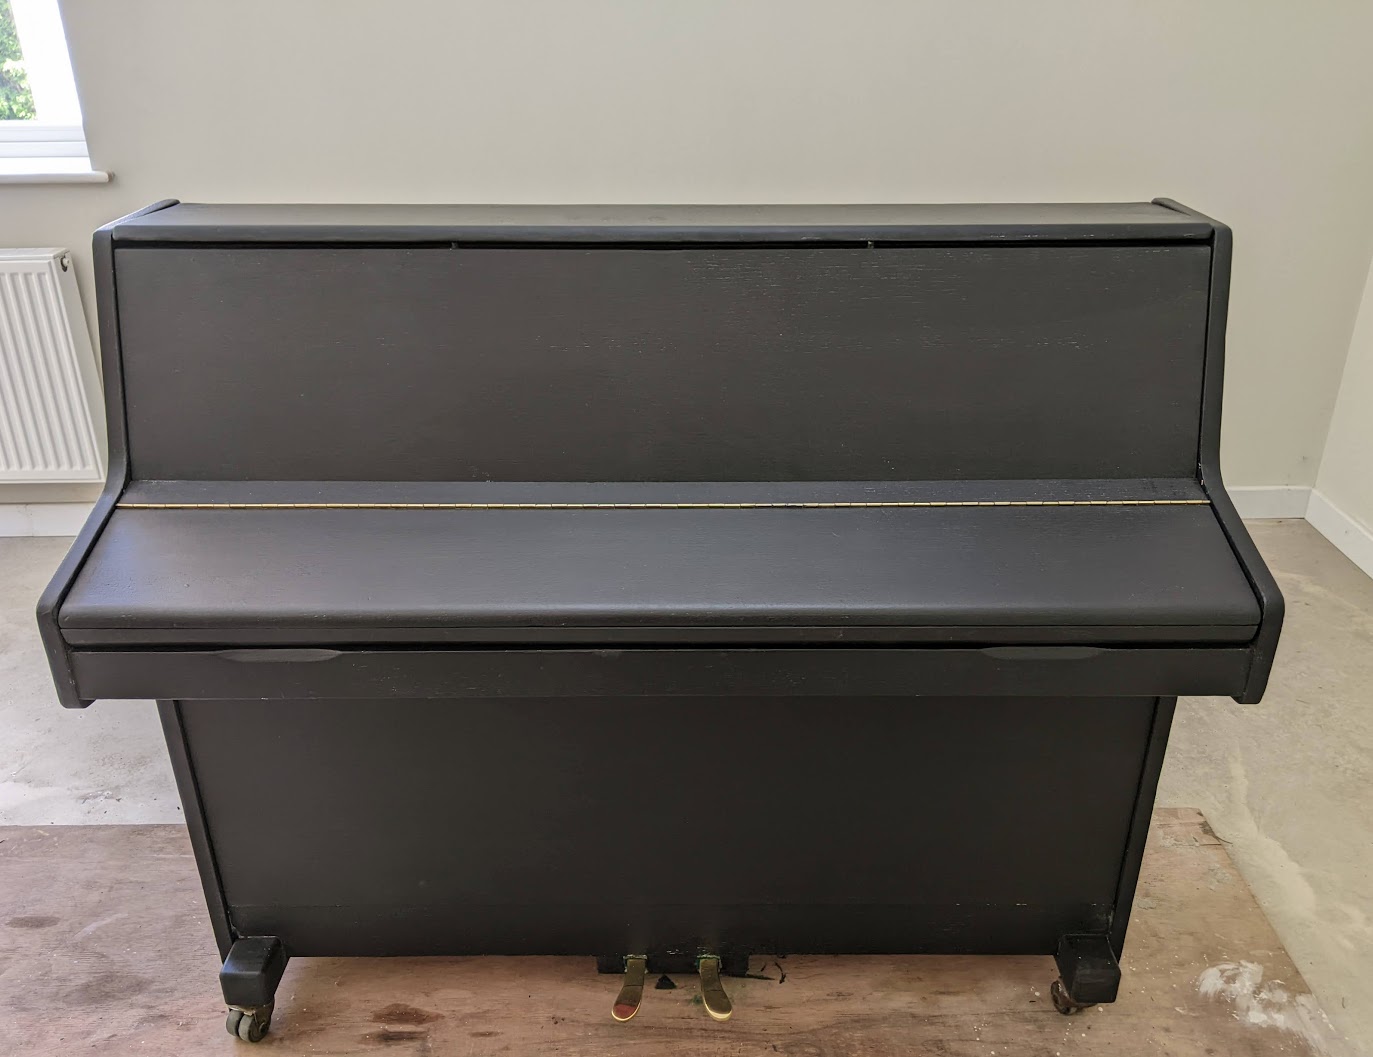 Barratt & Robinson Upright Piano with lid closed